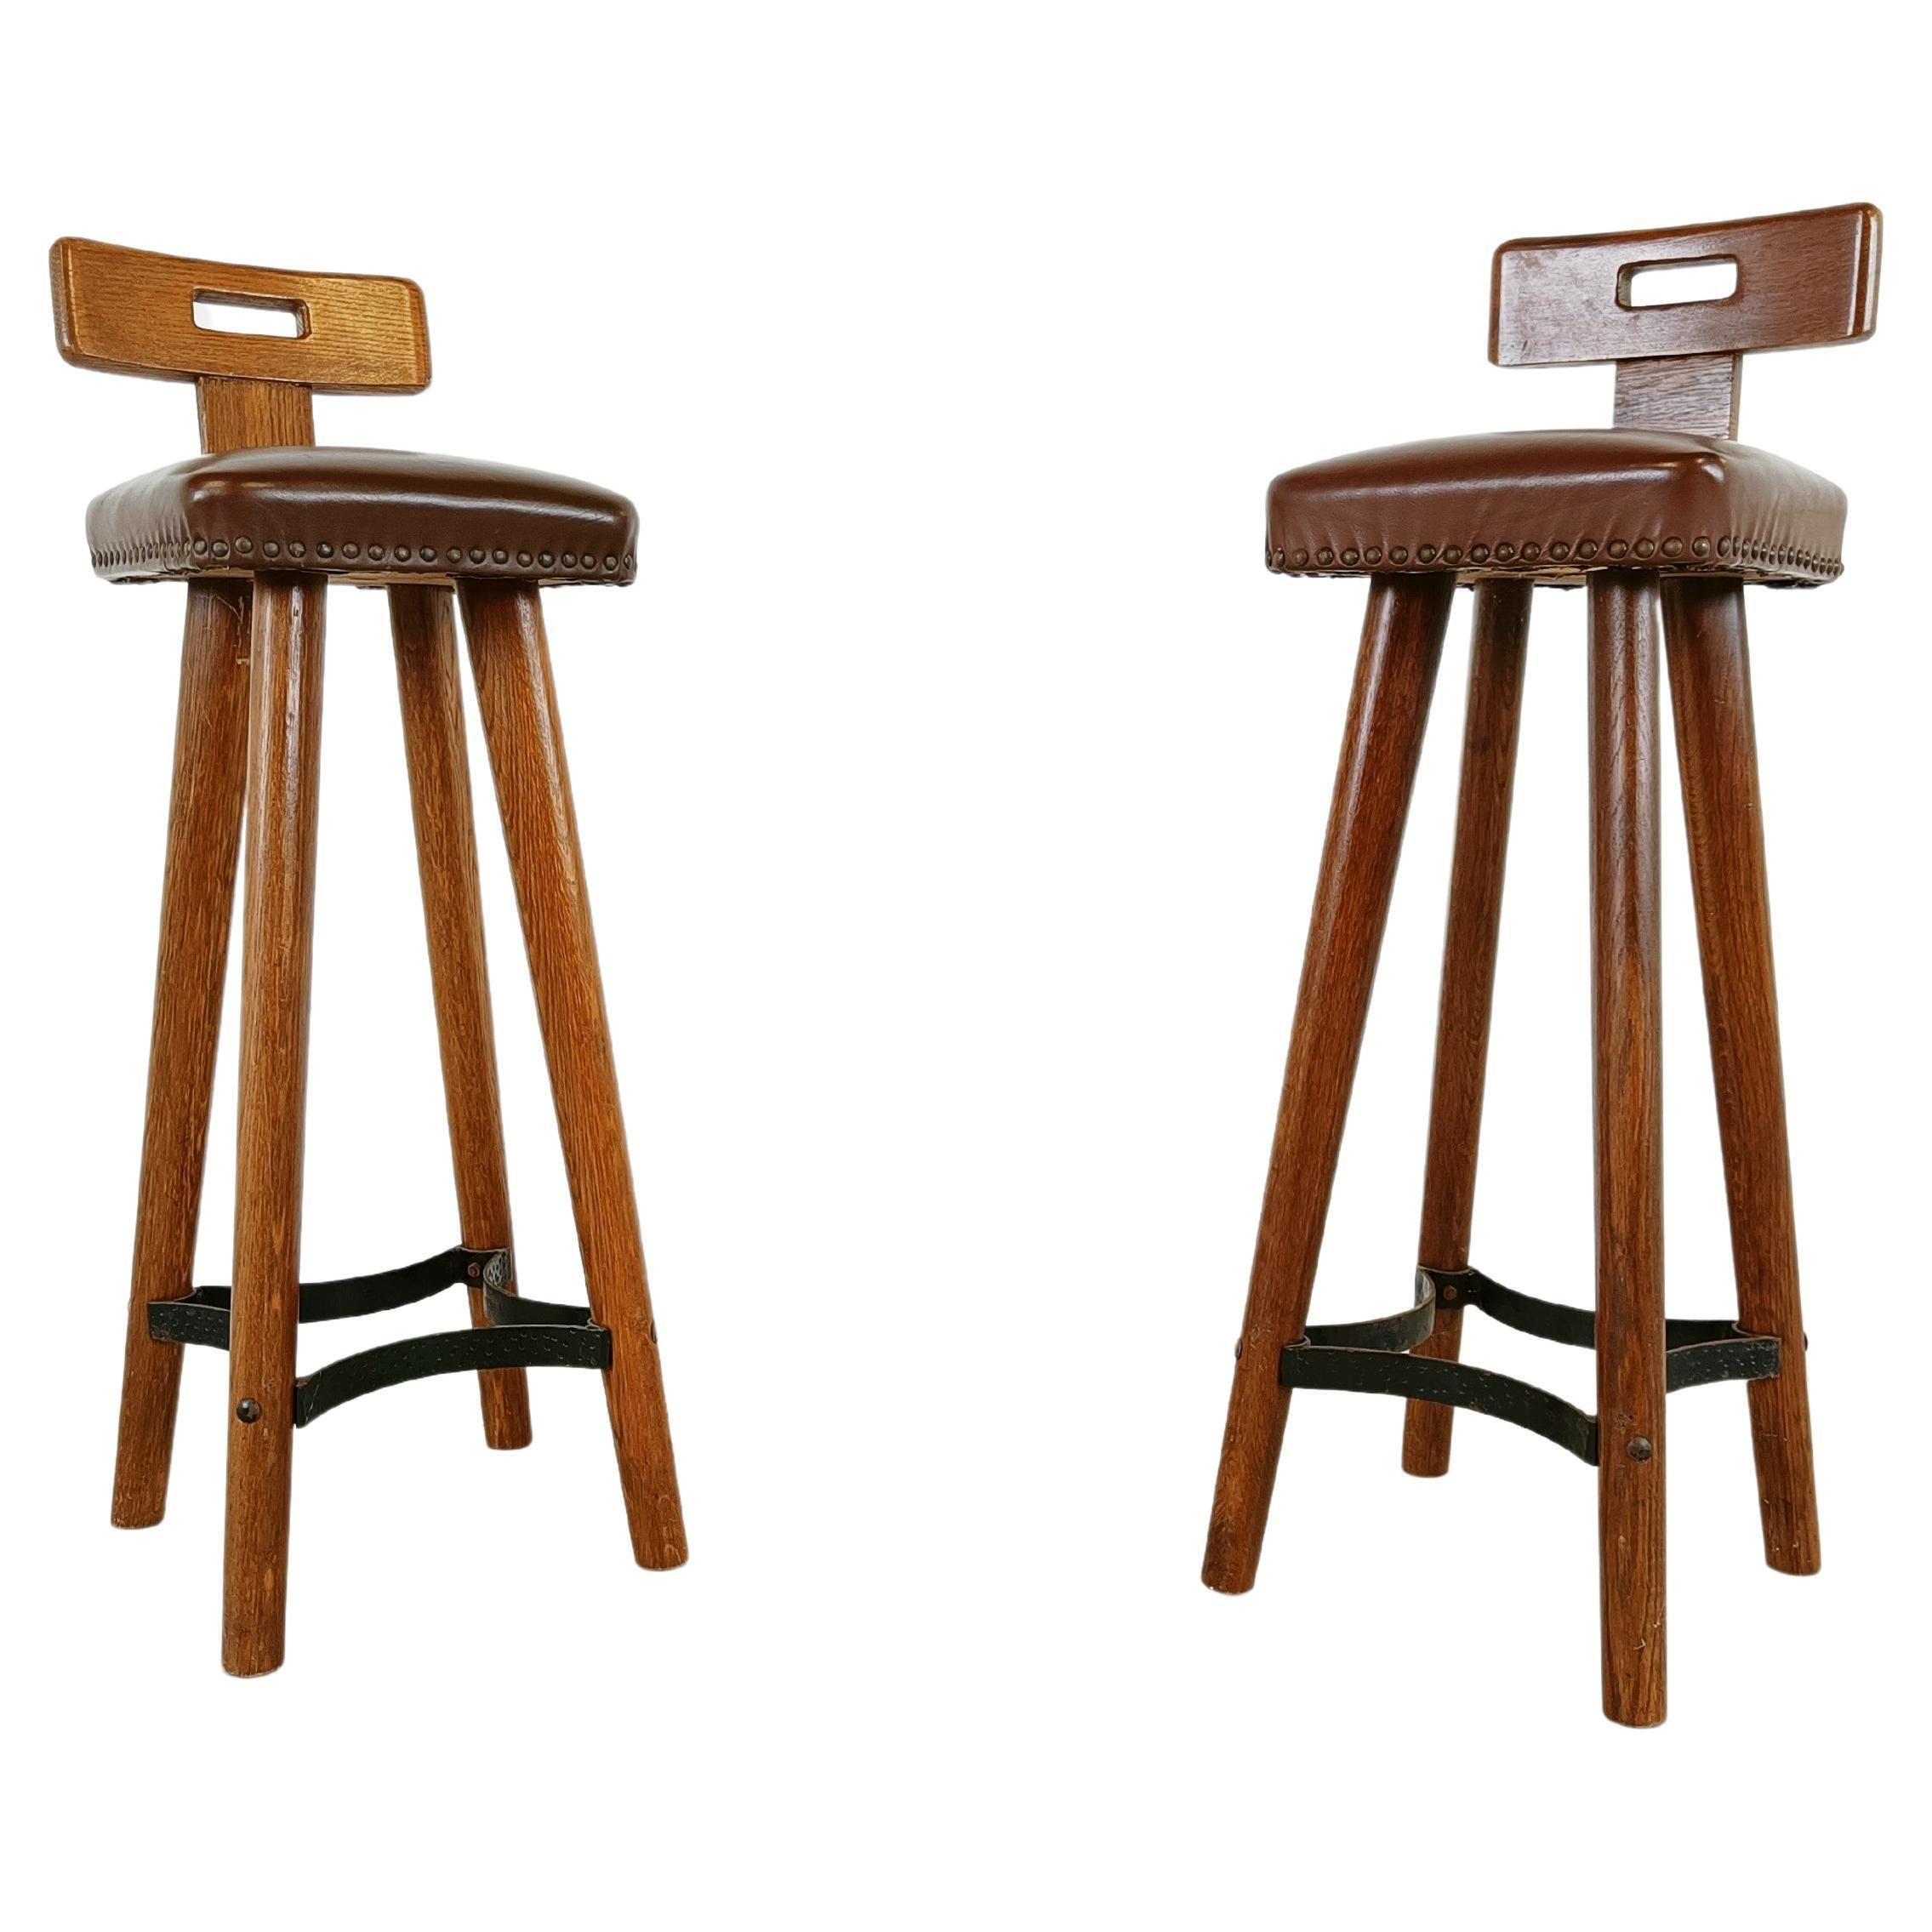 Pair of vintage brutalist bar stools, 1960s